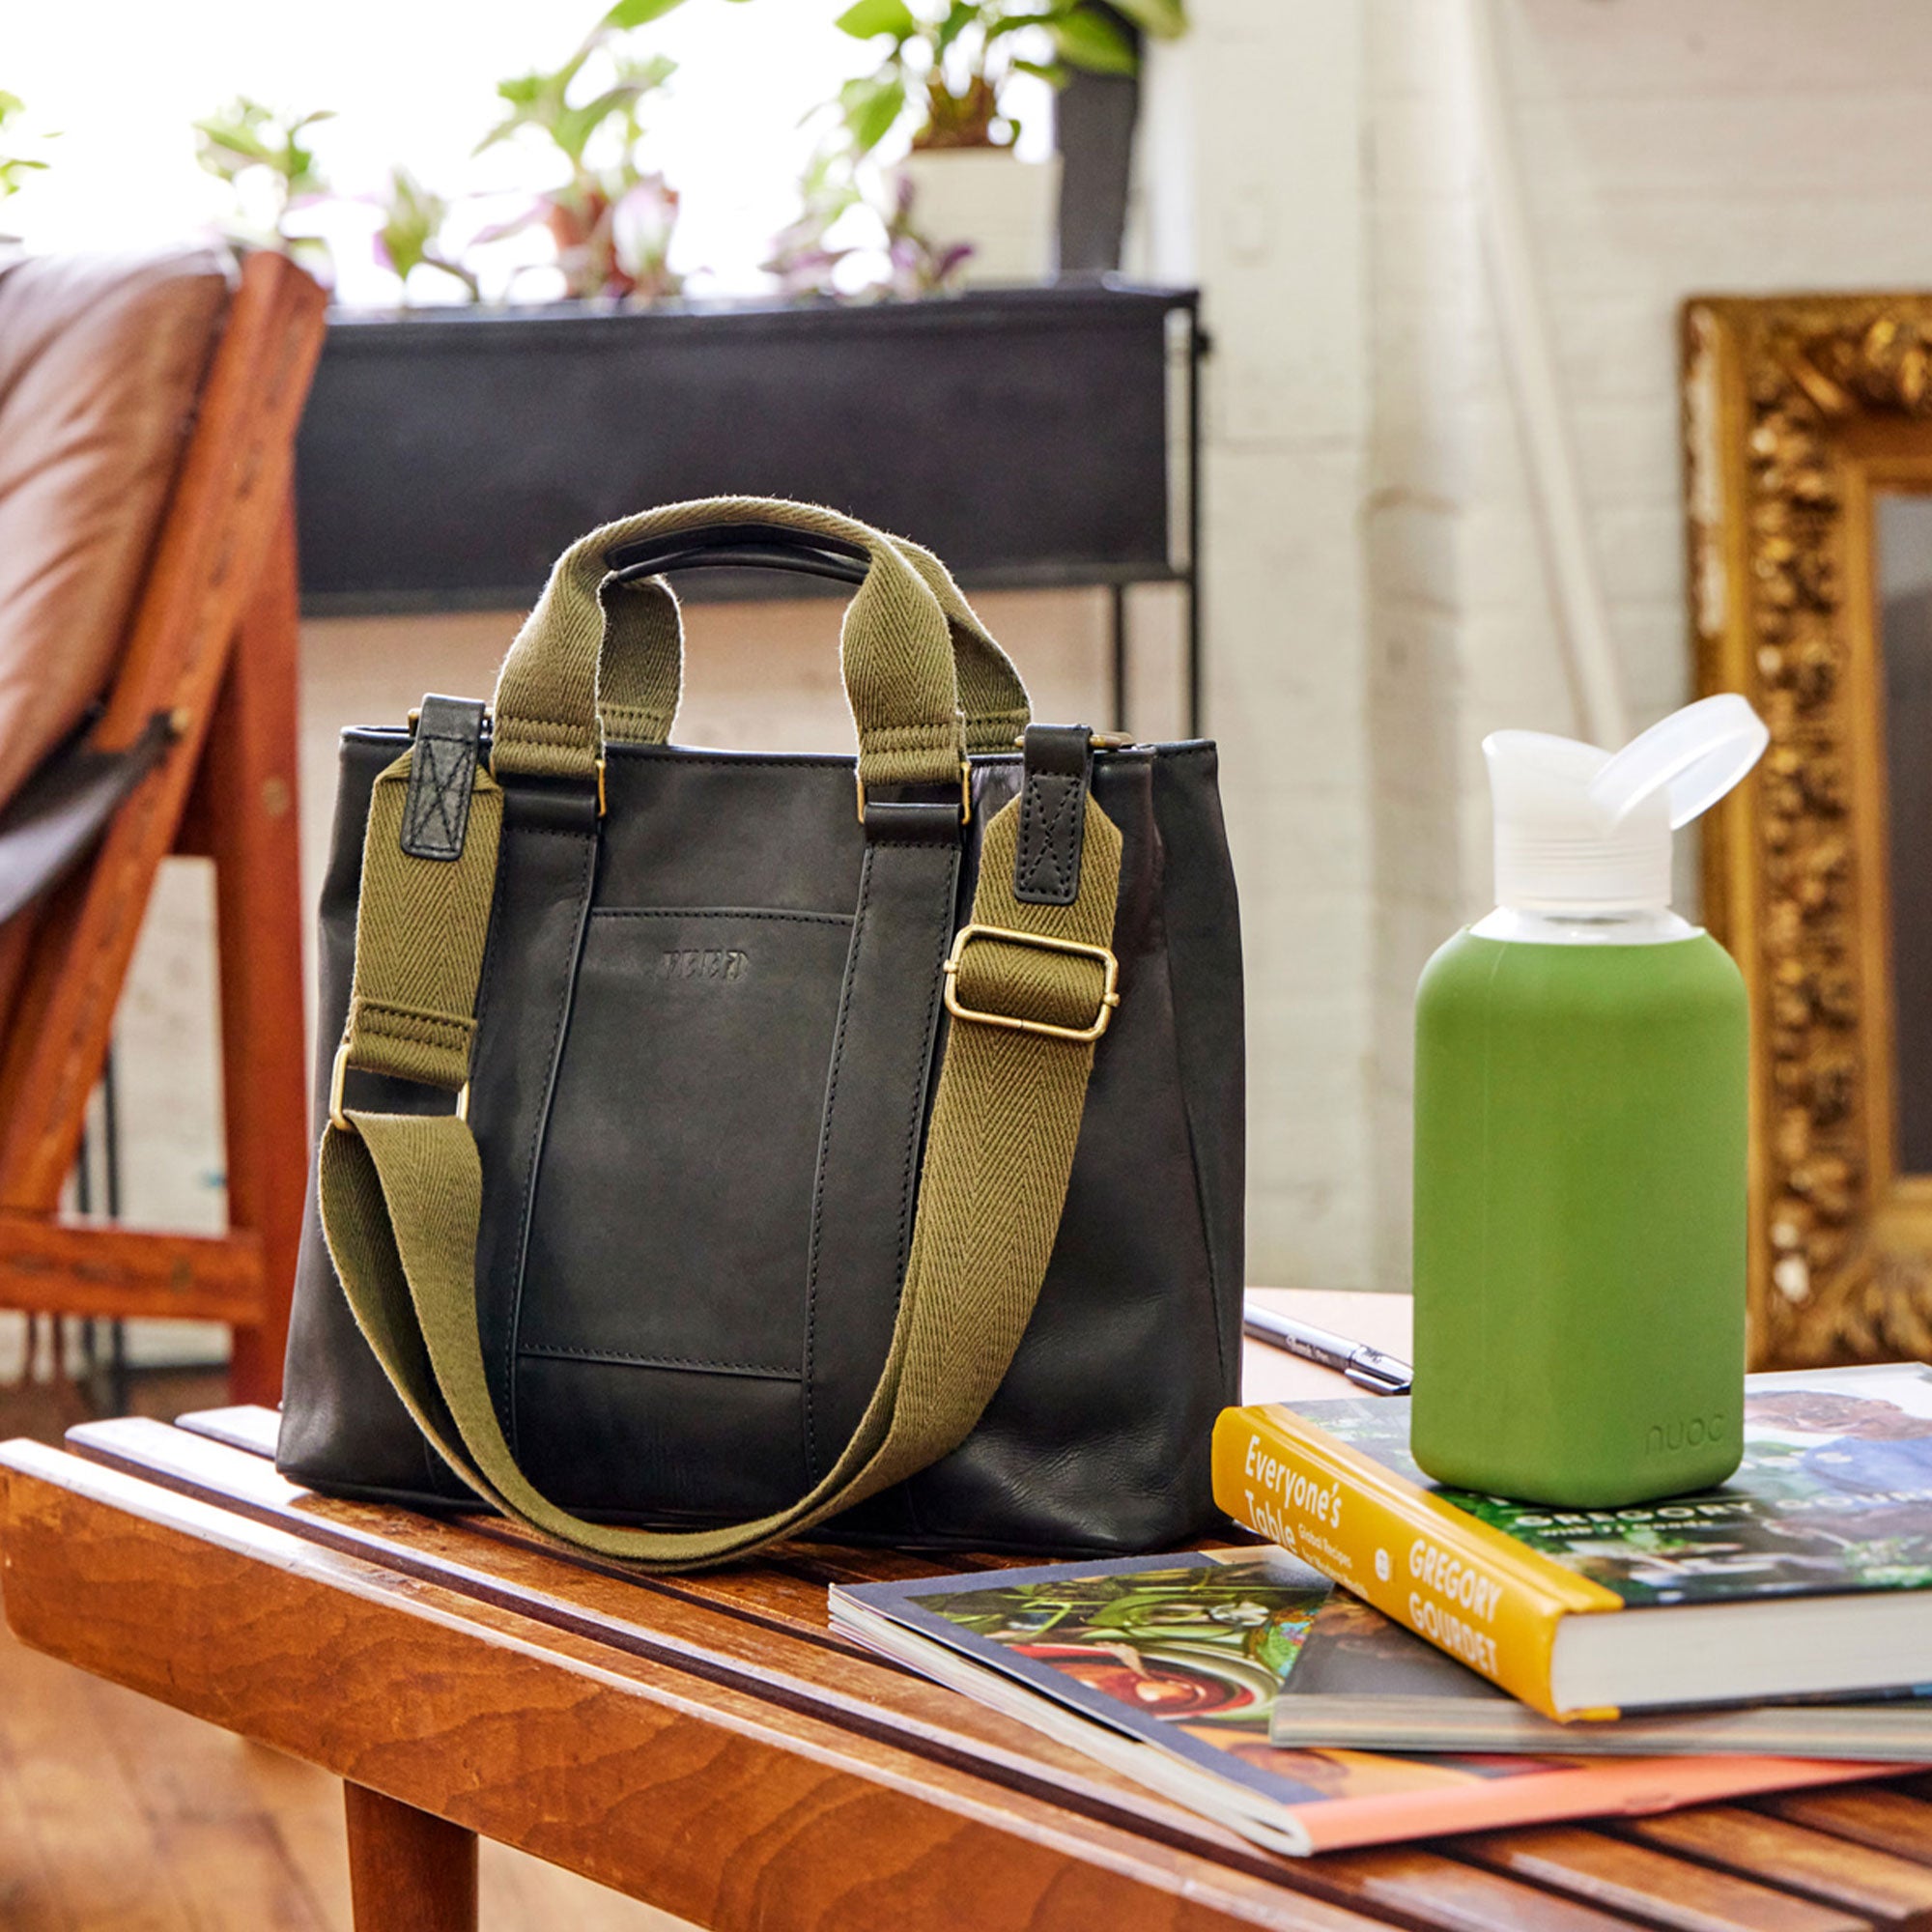 FEED, Bags, Feed Leather Work Bag Tote Ipad Kindle Business Quiet Luxury  Minimalist Travel